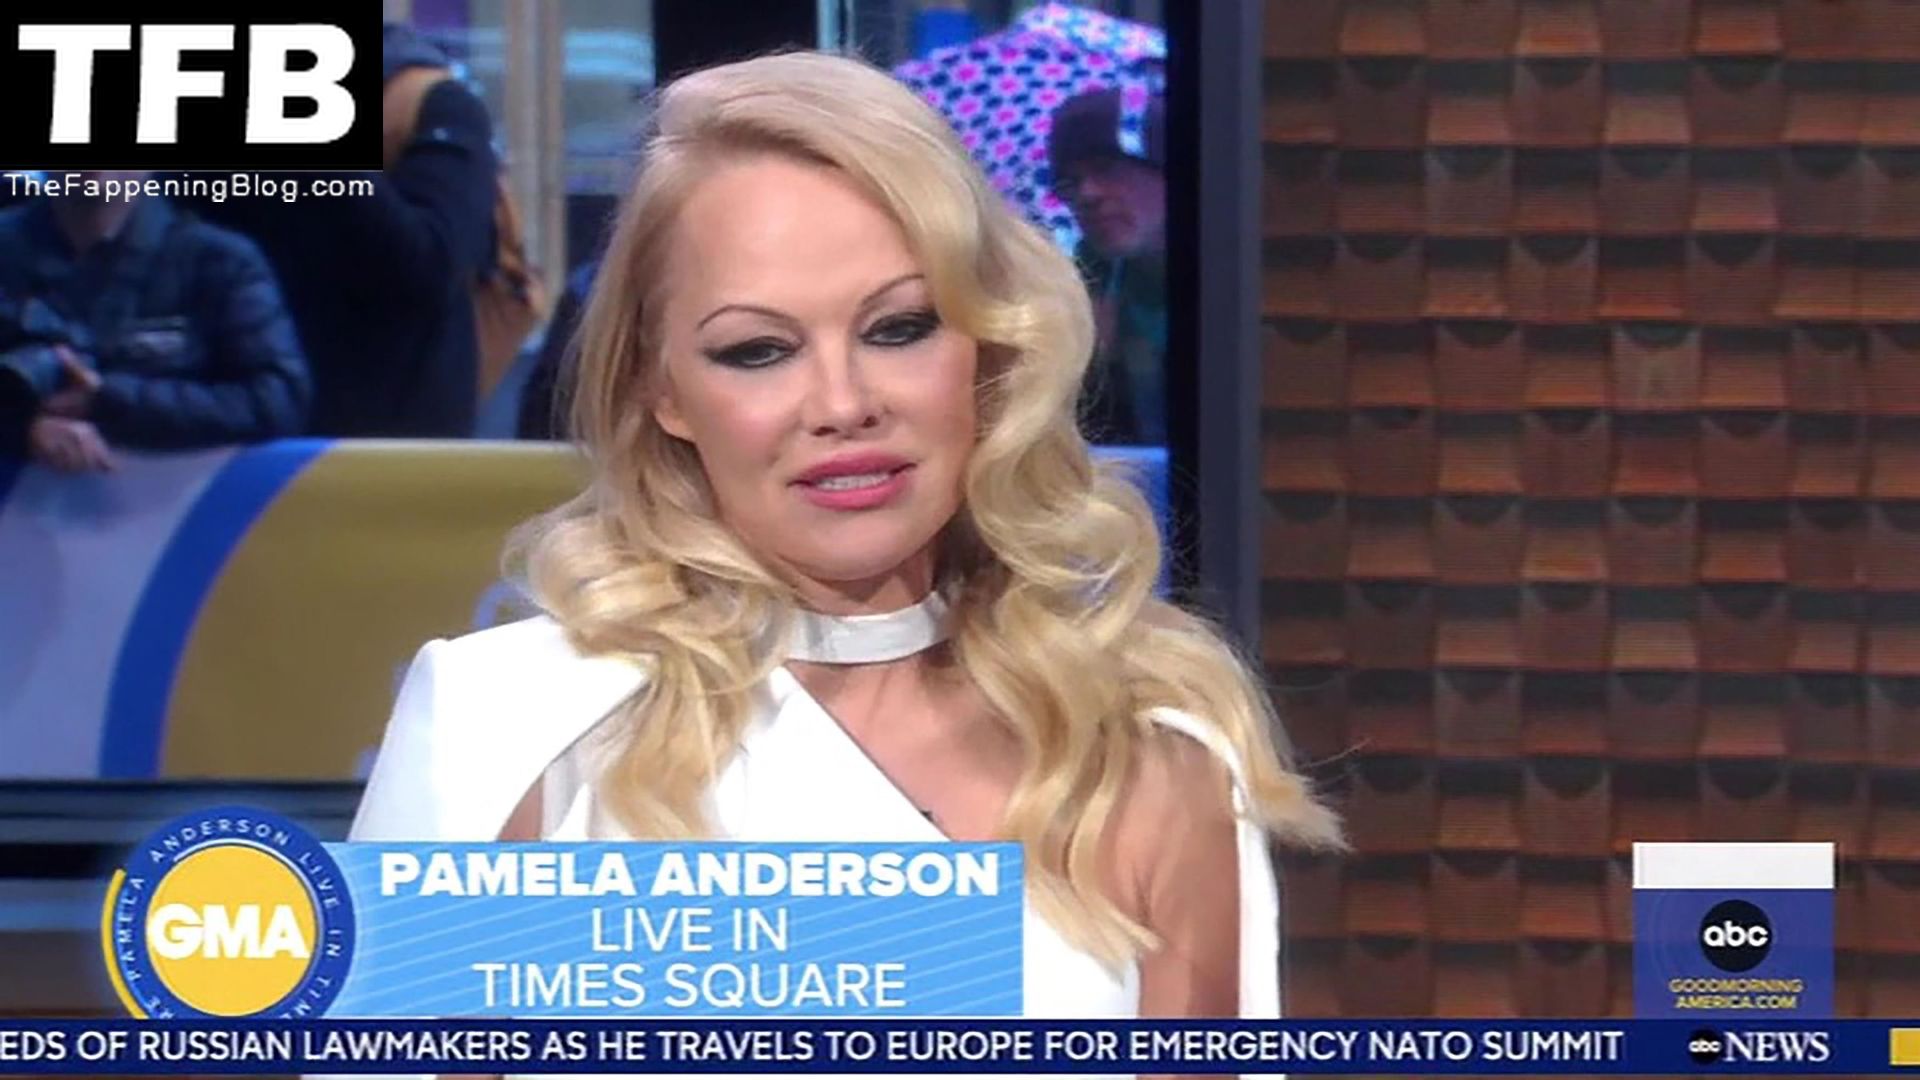 Pamela-Anderson-Hot-The-Fappening-Blog-16.jpg